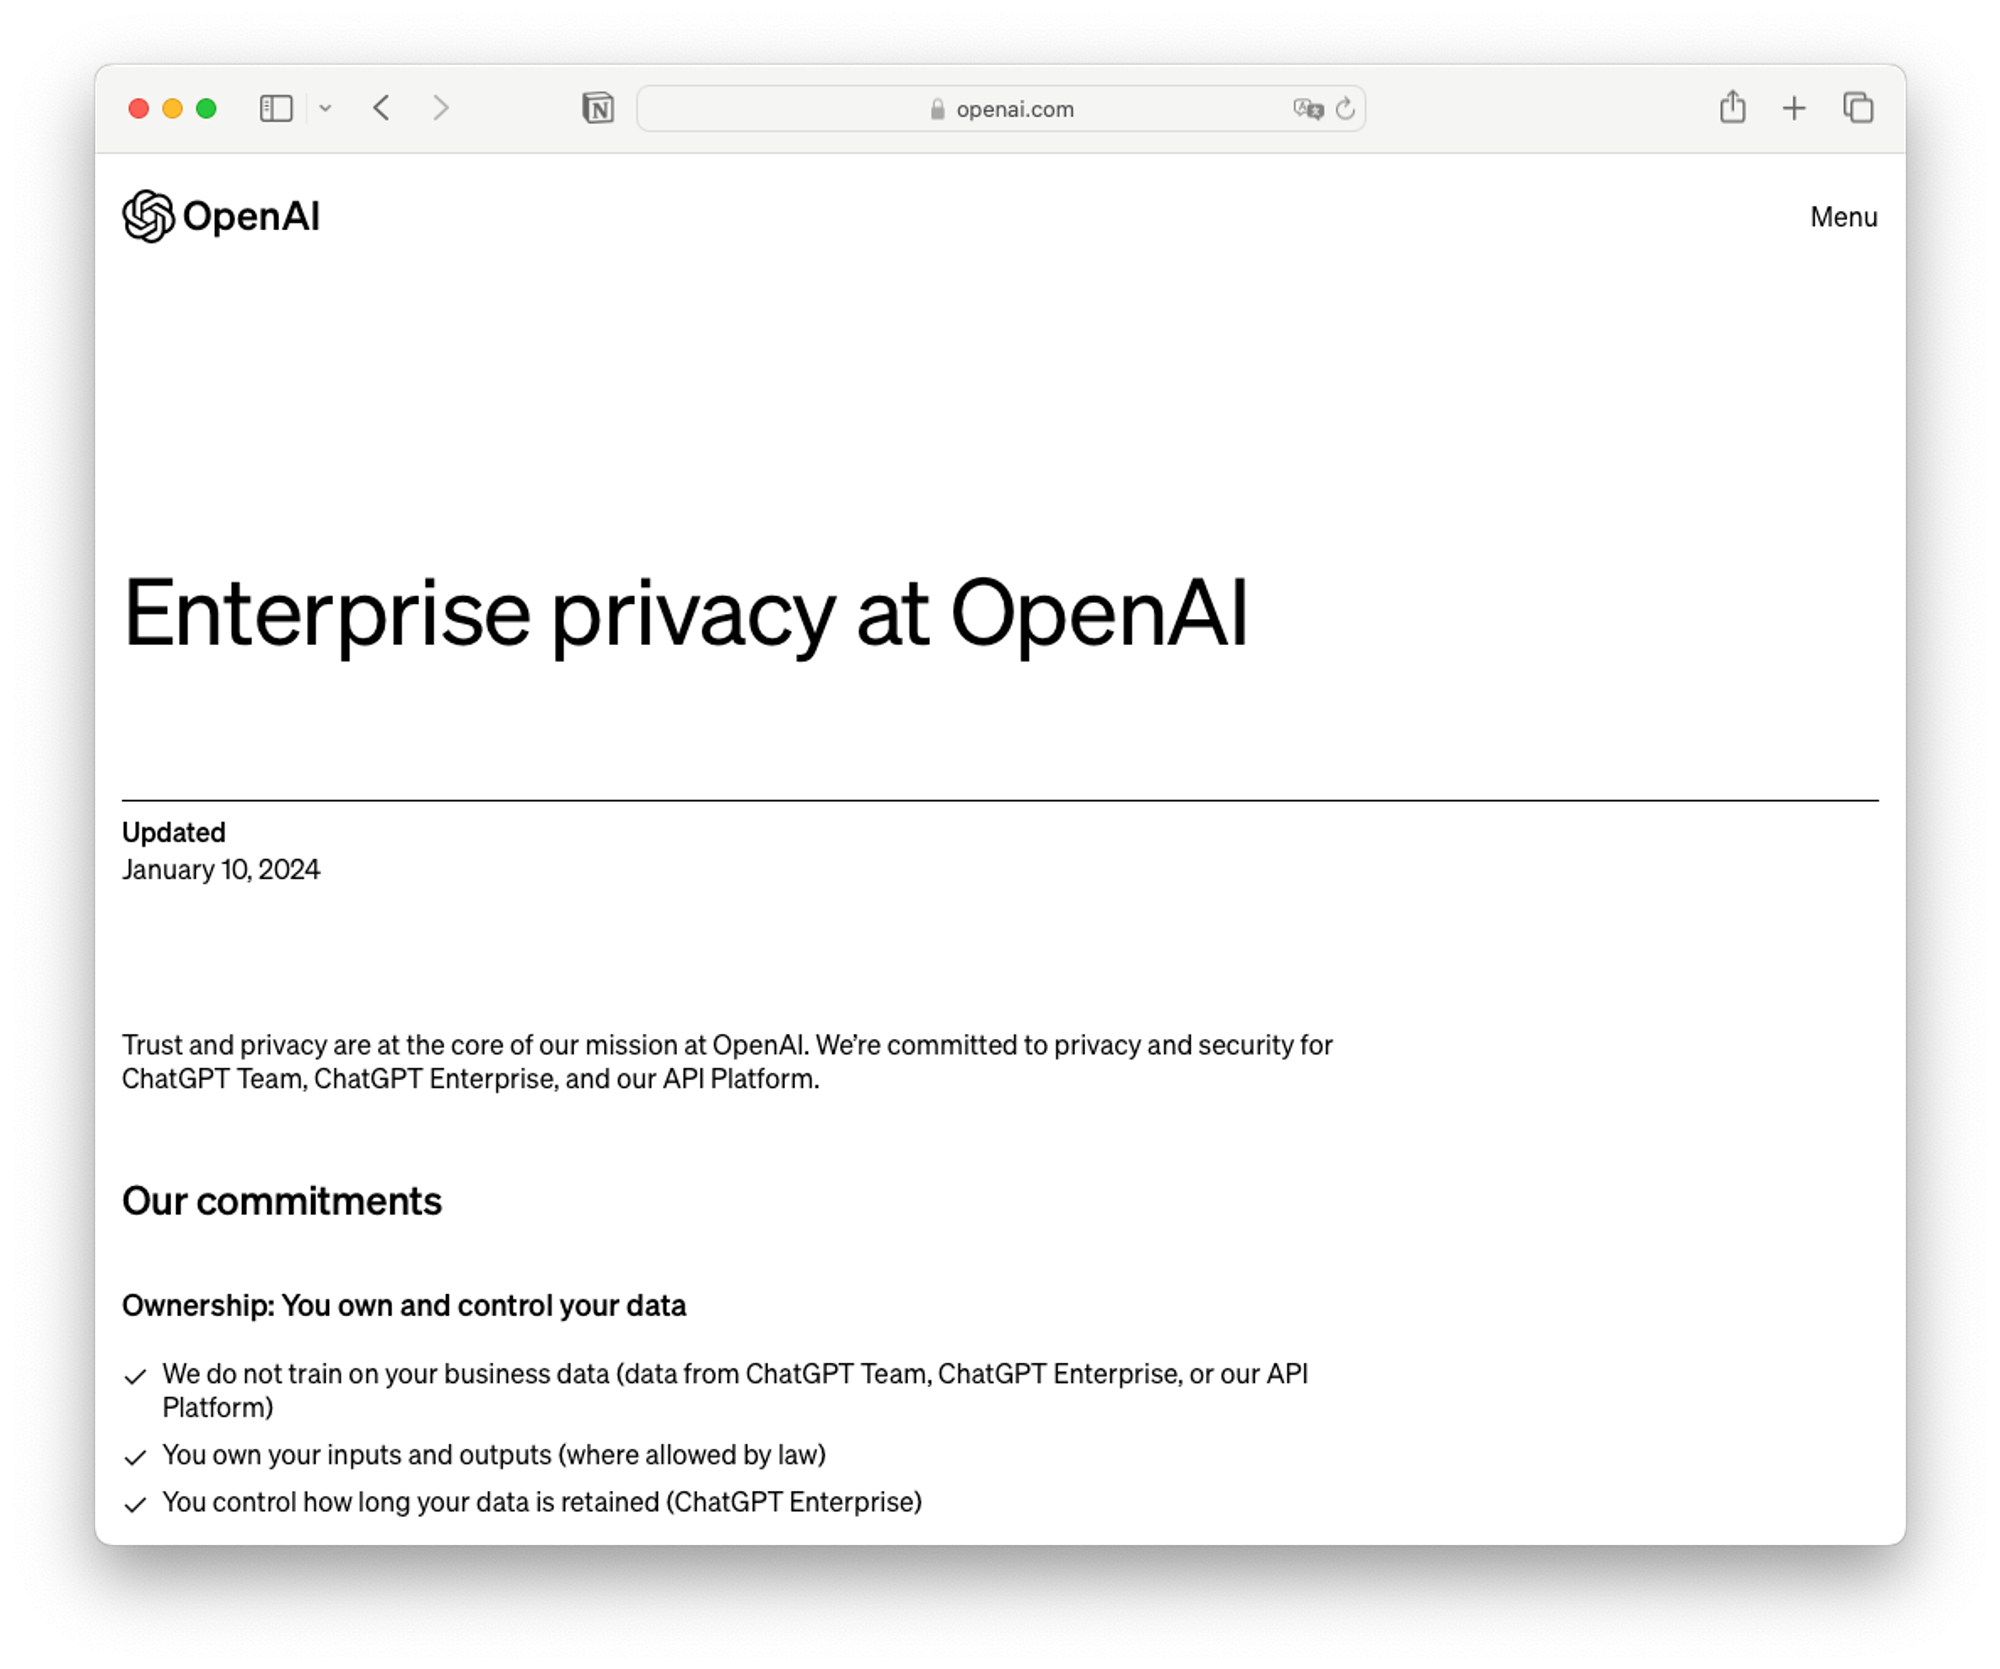 Source: Enterprise privacy at OpenAI https://openai.com/enterprise-privacy